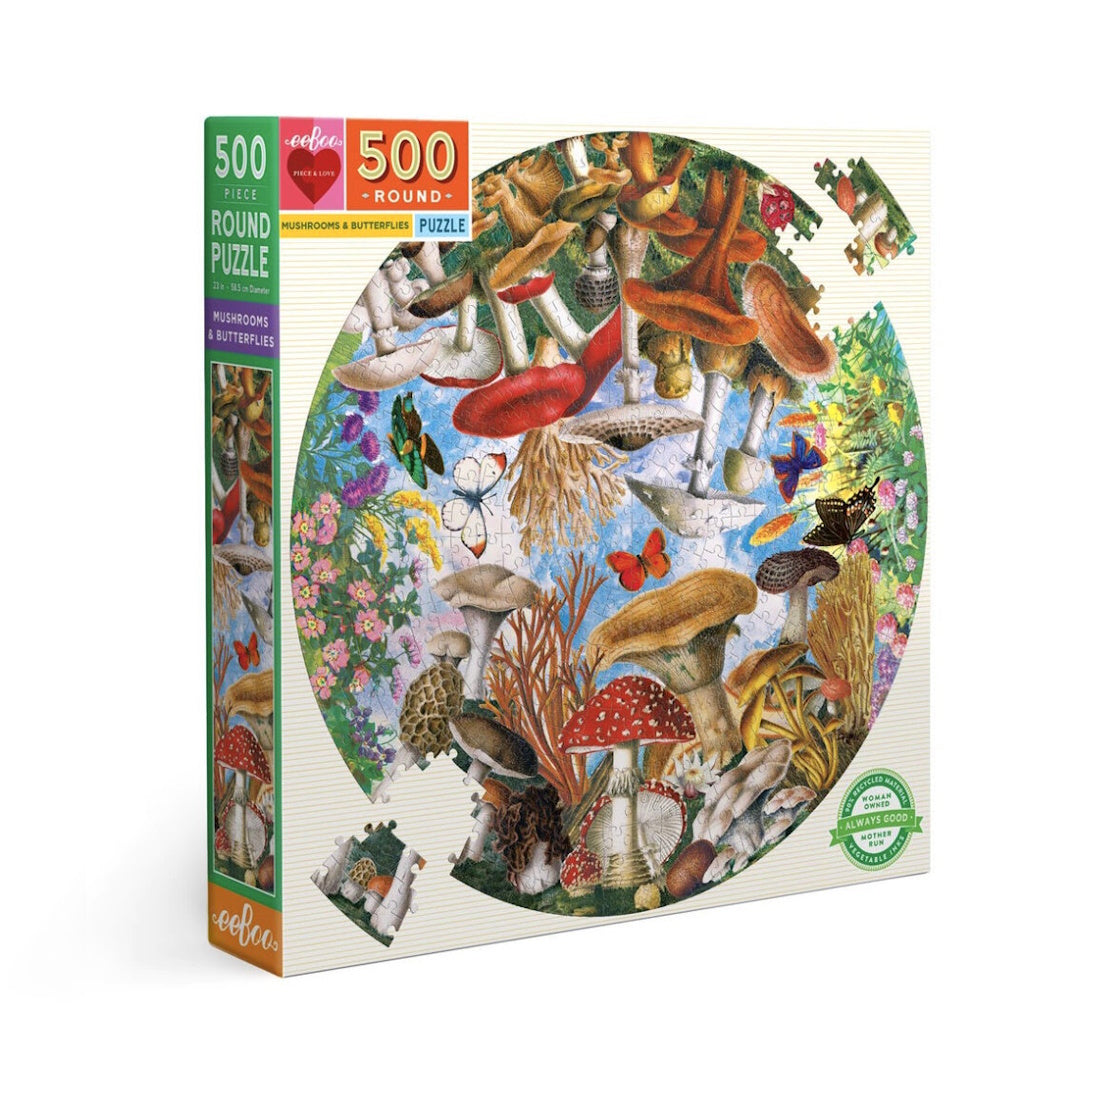 eeBoo 500 Piece Round Puzzle - Mushrooms & Butterflies